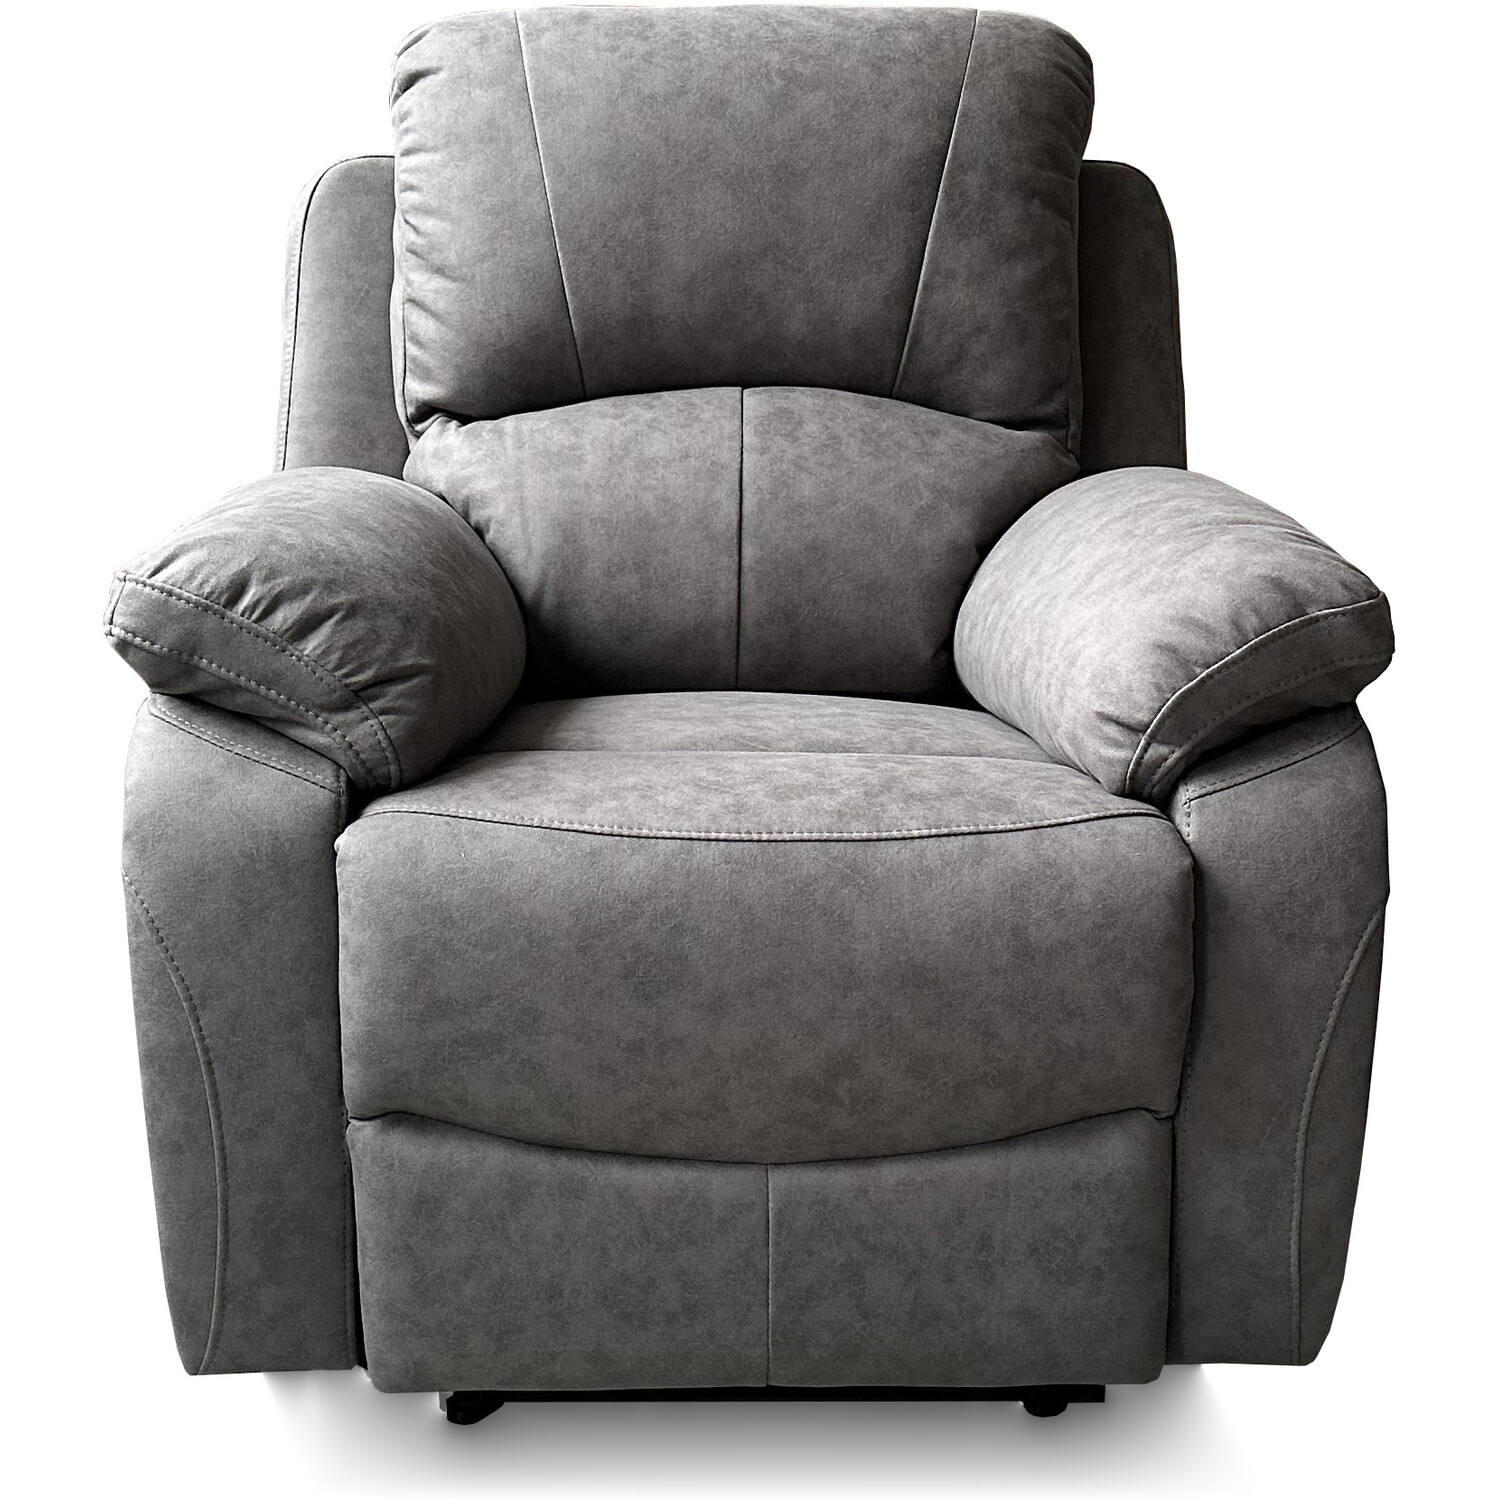 Milano Charcoal Grey Fabric Manual Recliner Chair Image 2